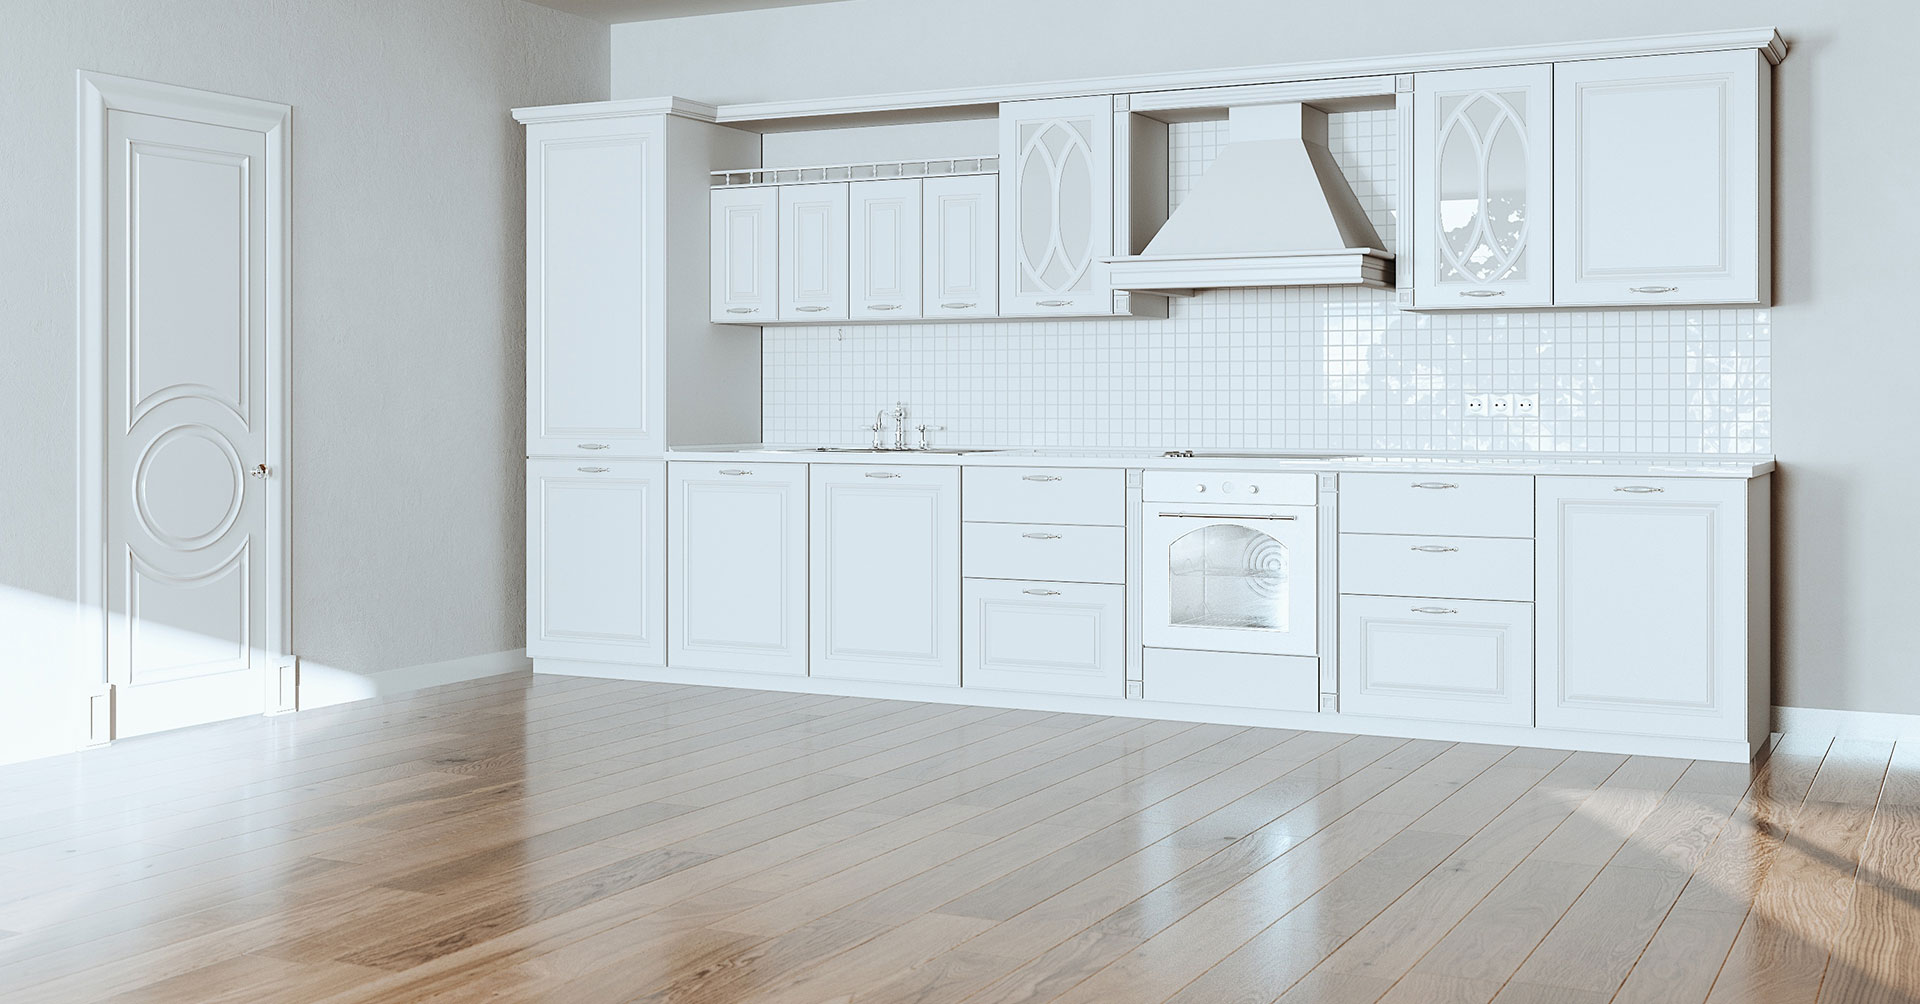 Home Improvement Studio | Flooring, Cabinets, Countertops